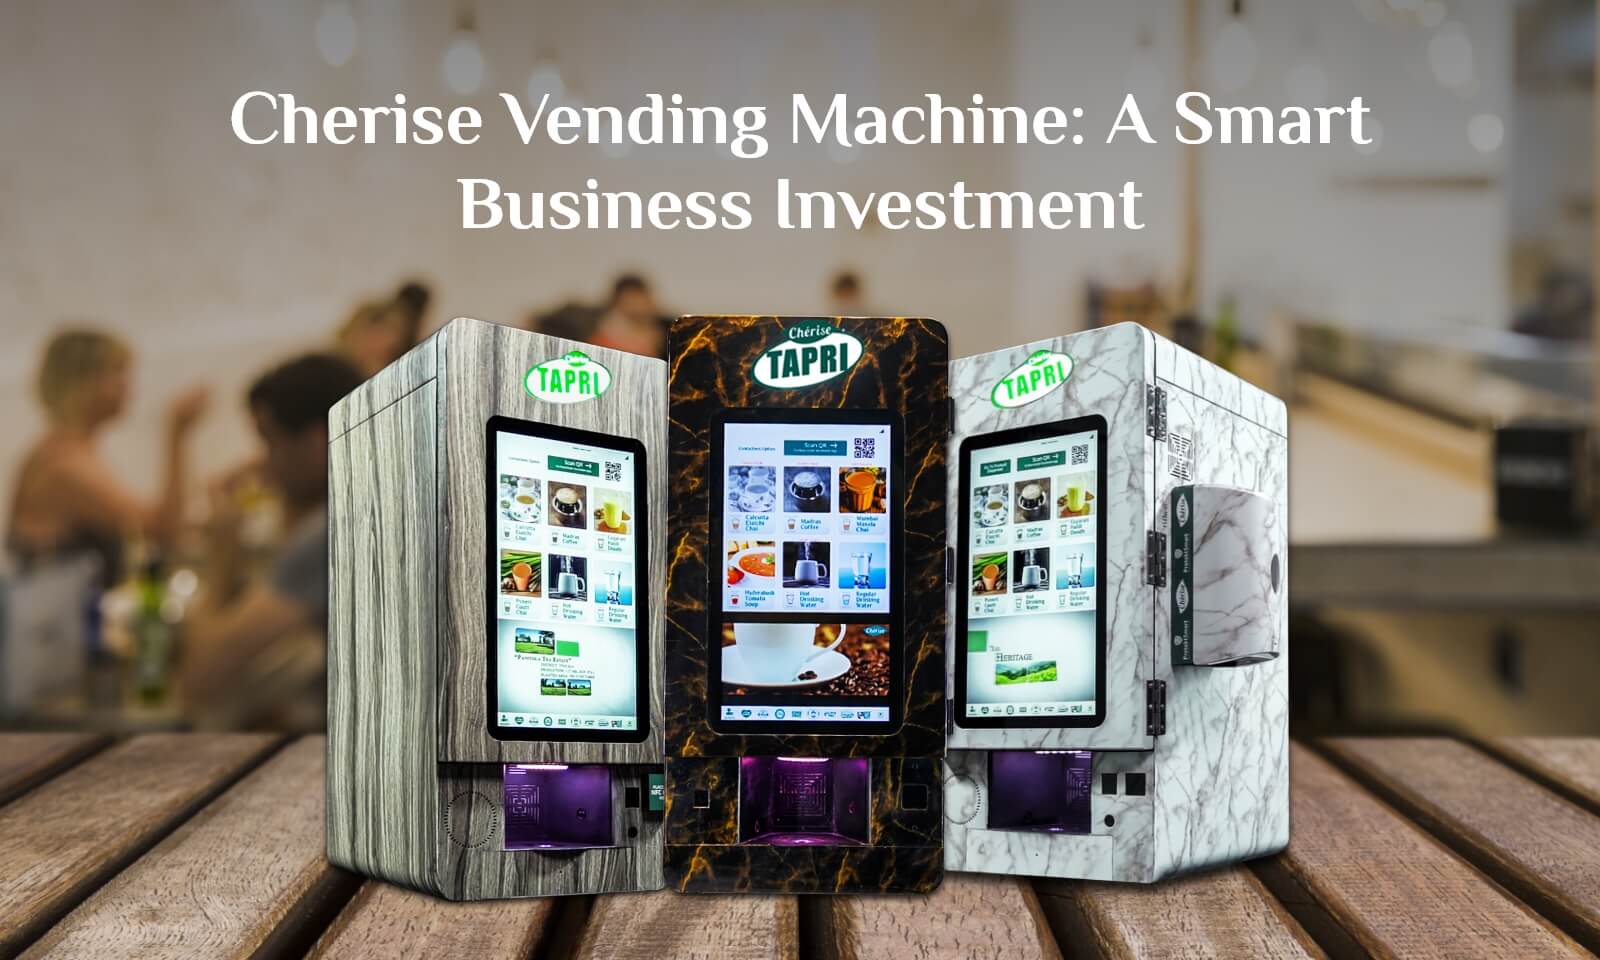 Cherise Vending Machine: A Smart Business Investment